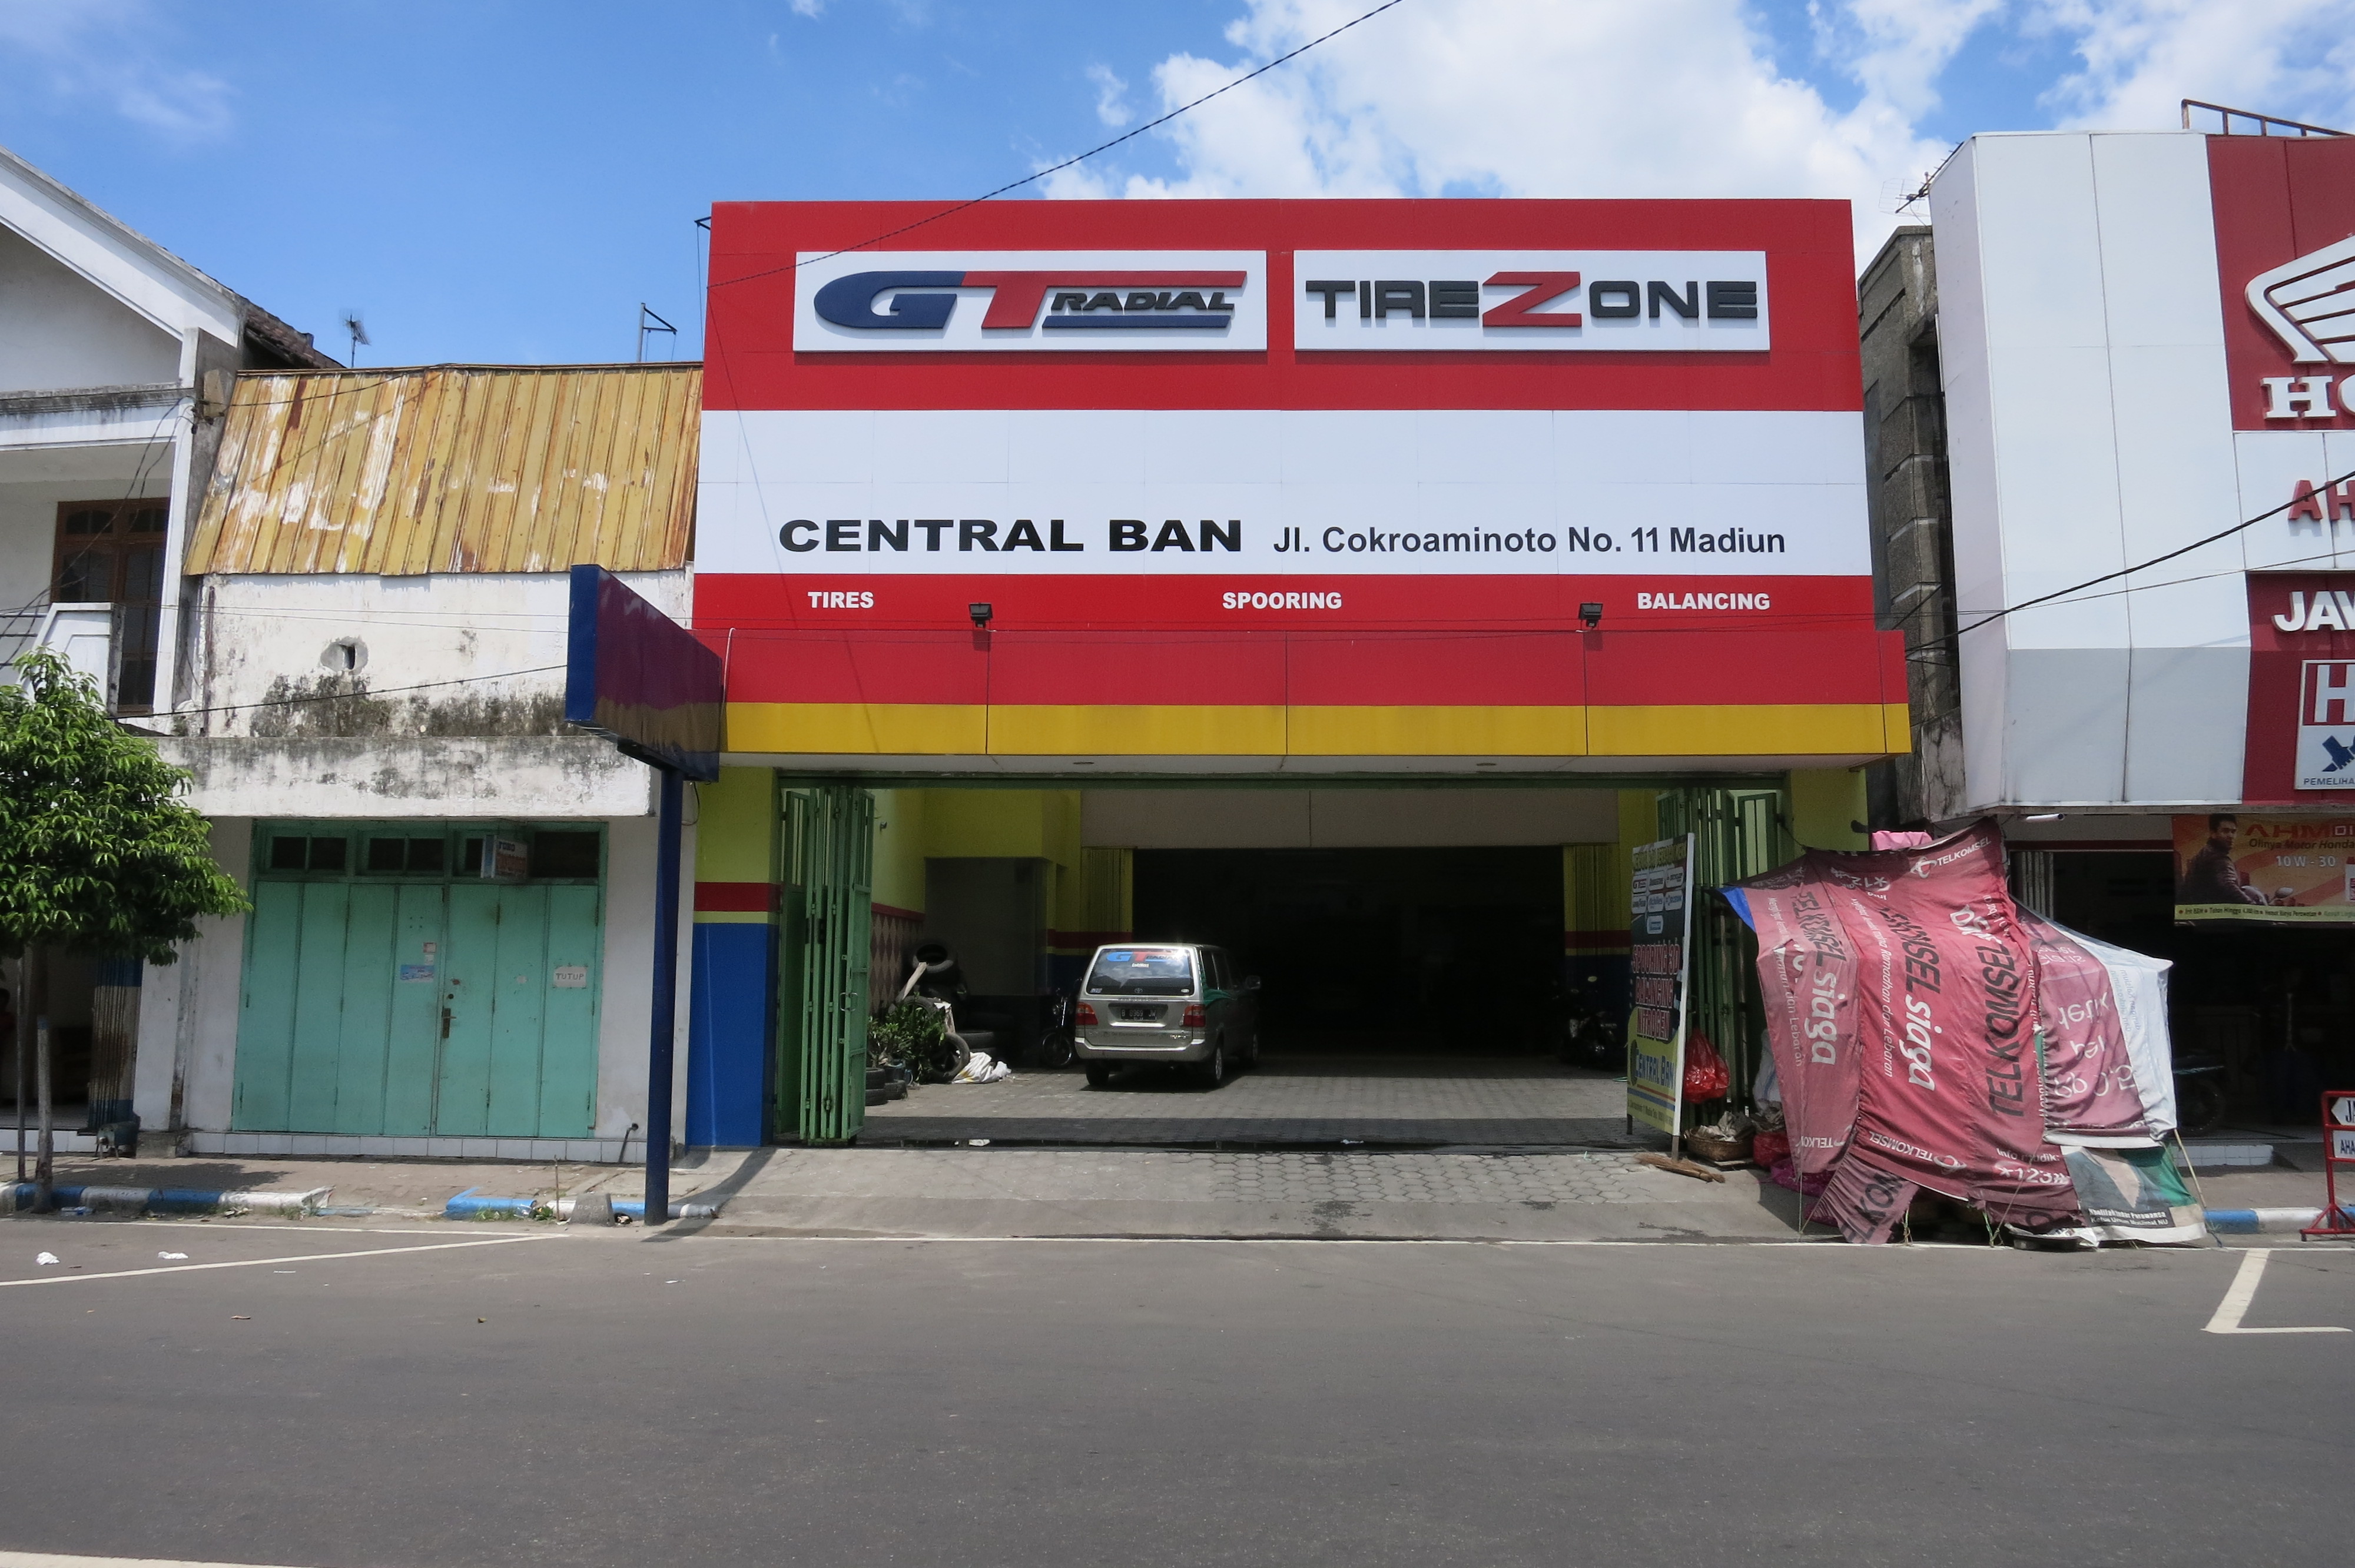 Tirezone Central Ban